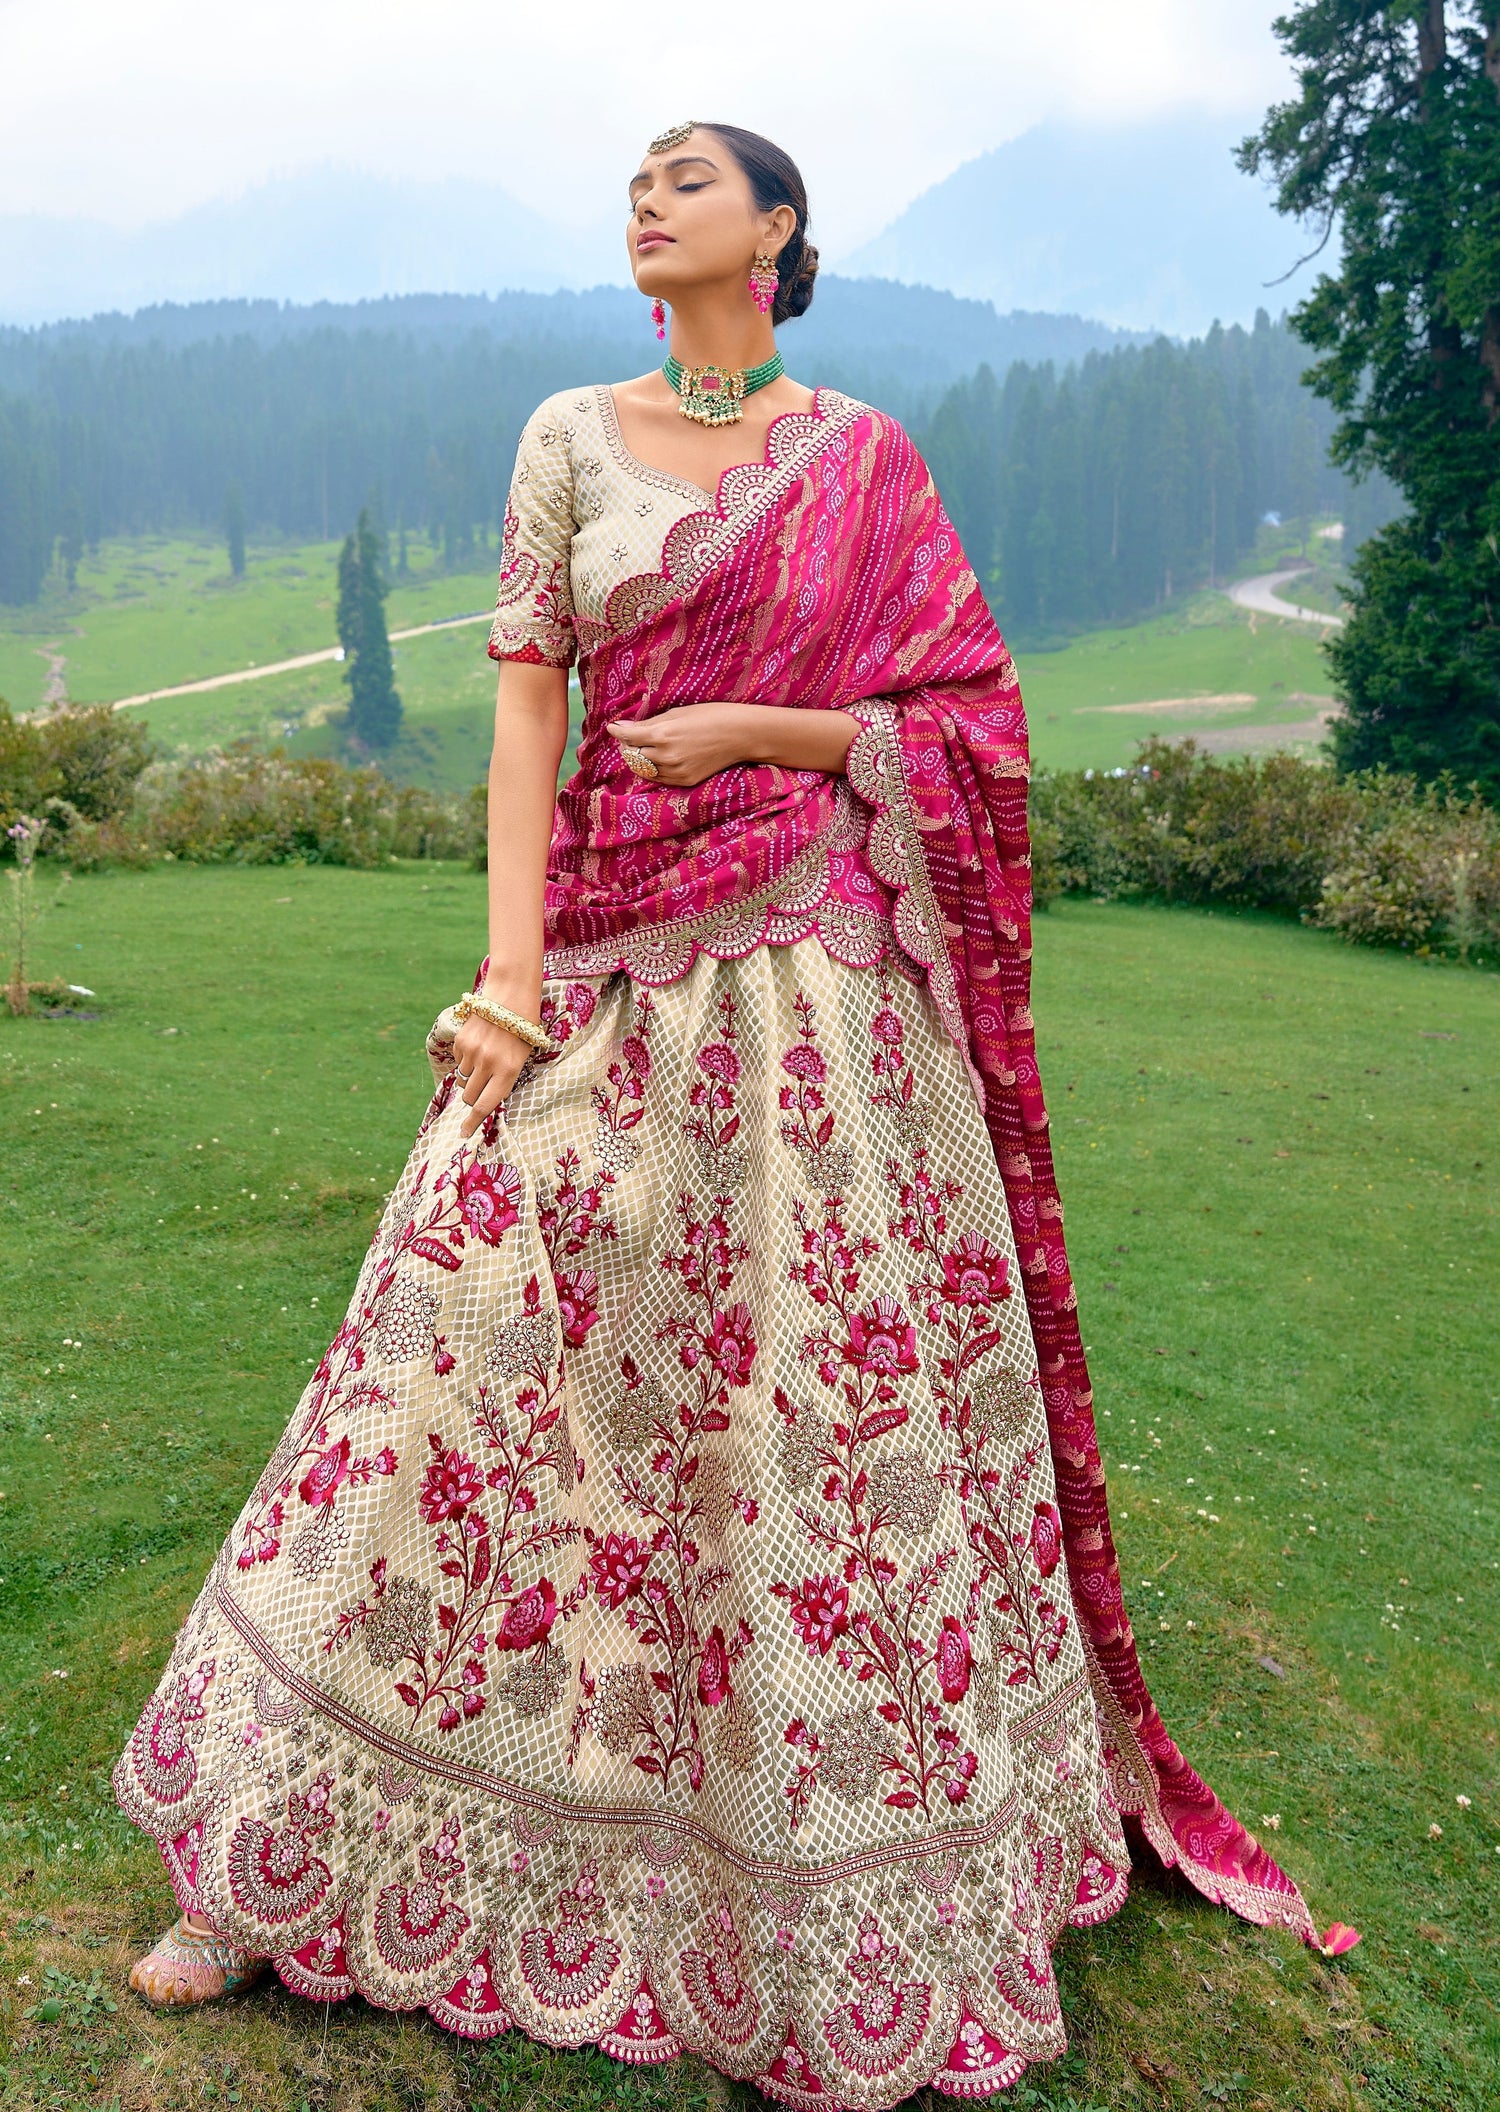 Styling A Royal Bride with 3 Dupattas | Dolly Jain Lehenga Dupatta Draping  Styles - YouTube